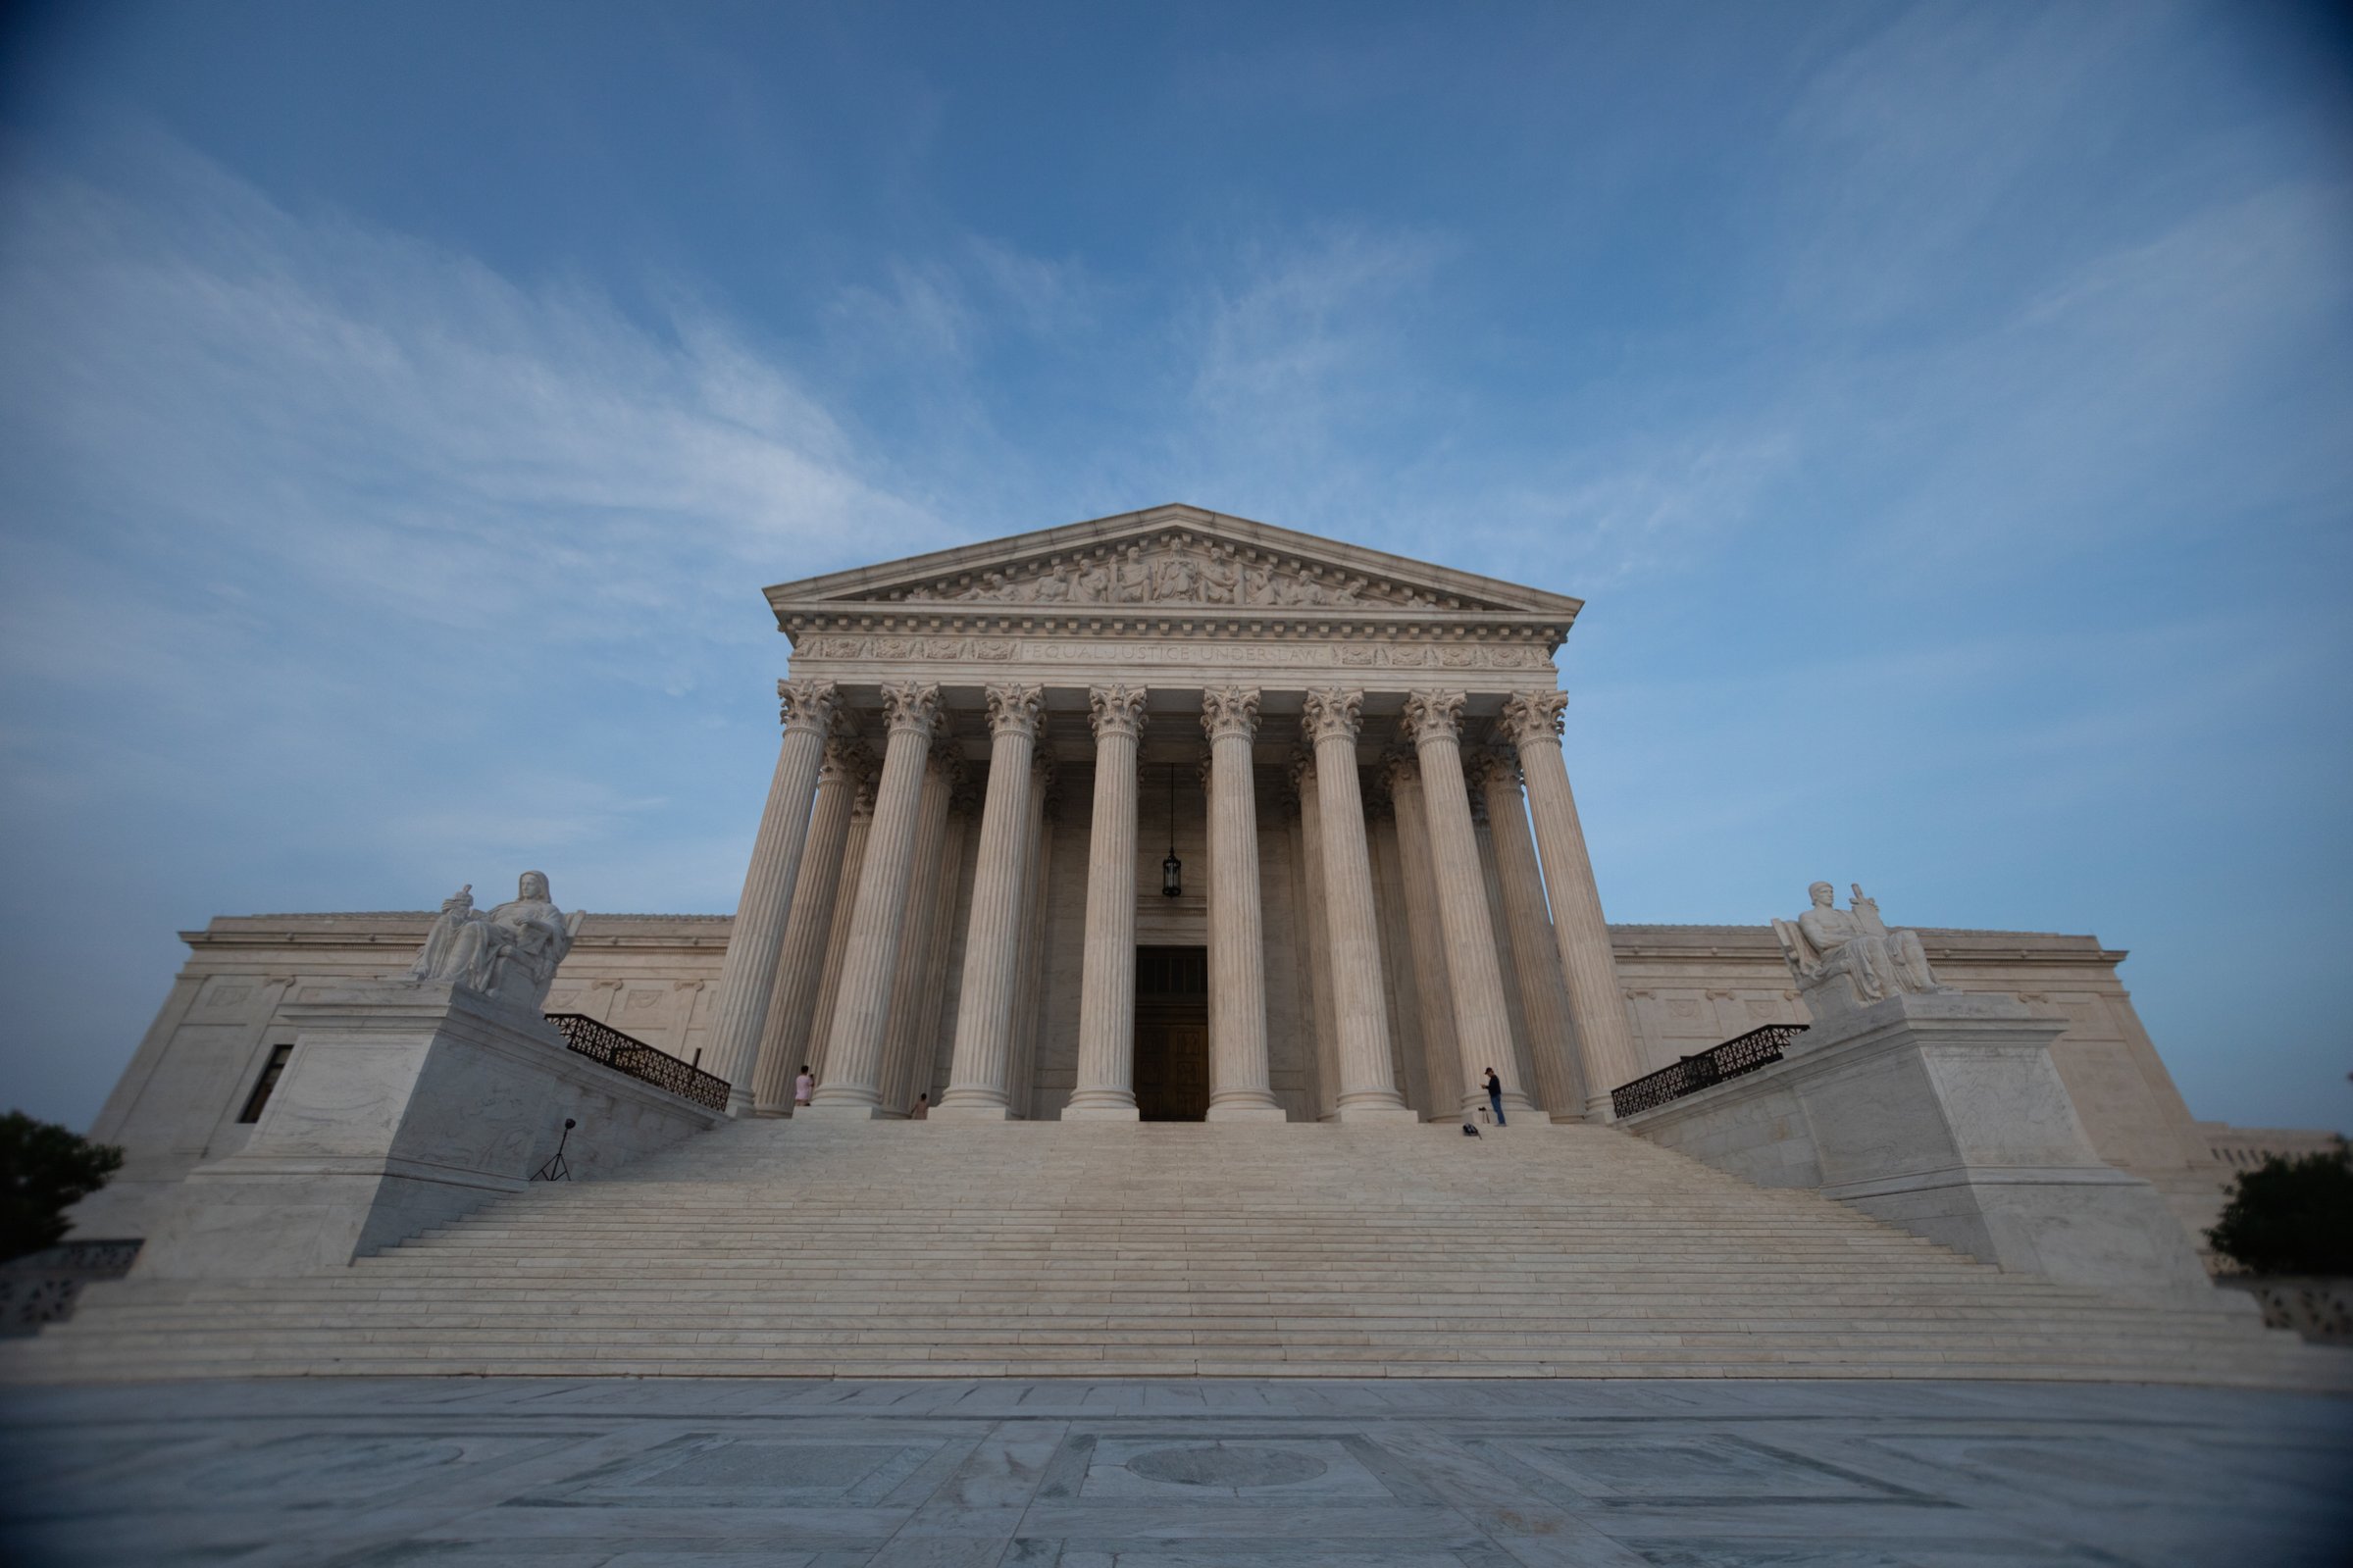 U.S. Supreme Court In Washinton